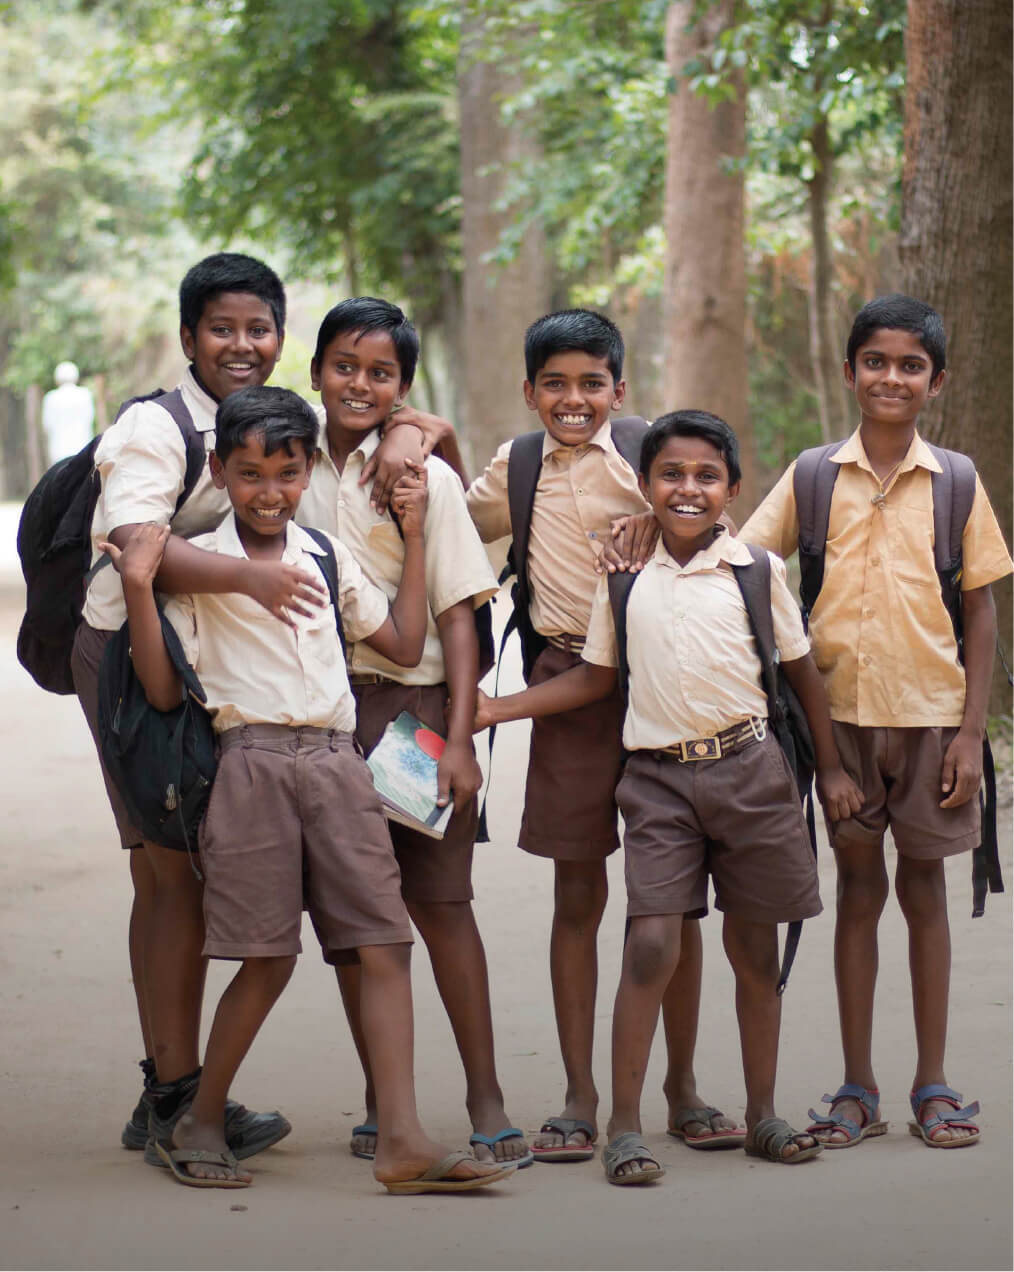 Kids in school uniform.